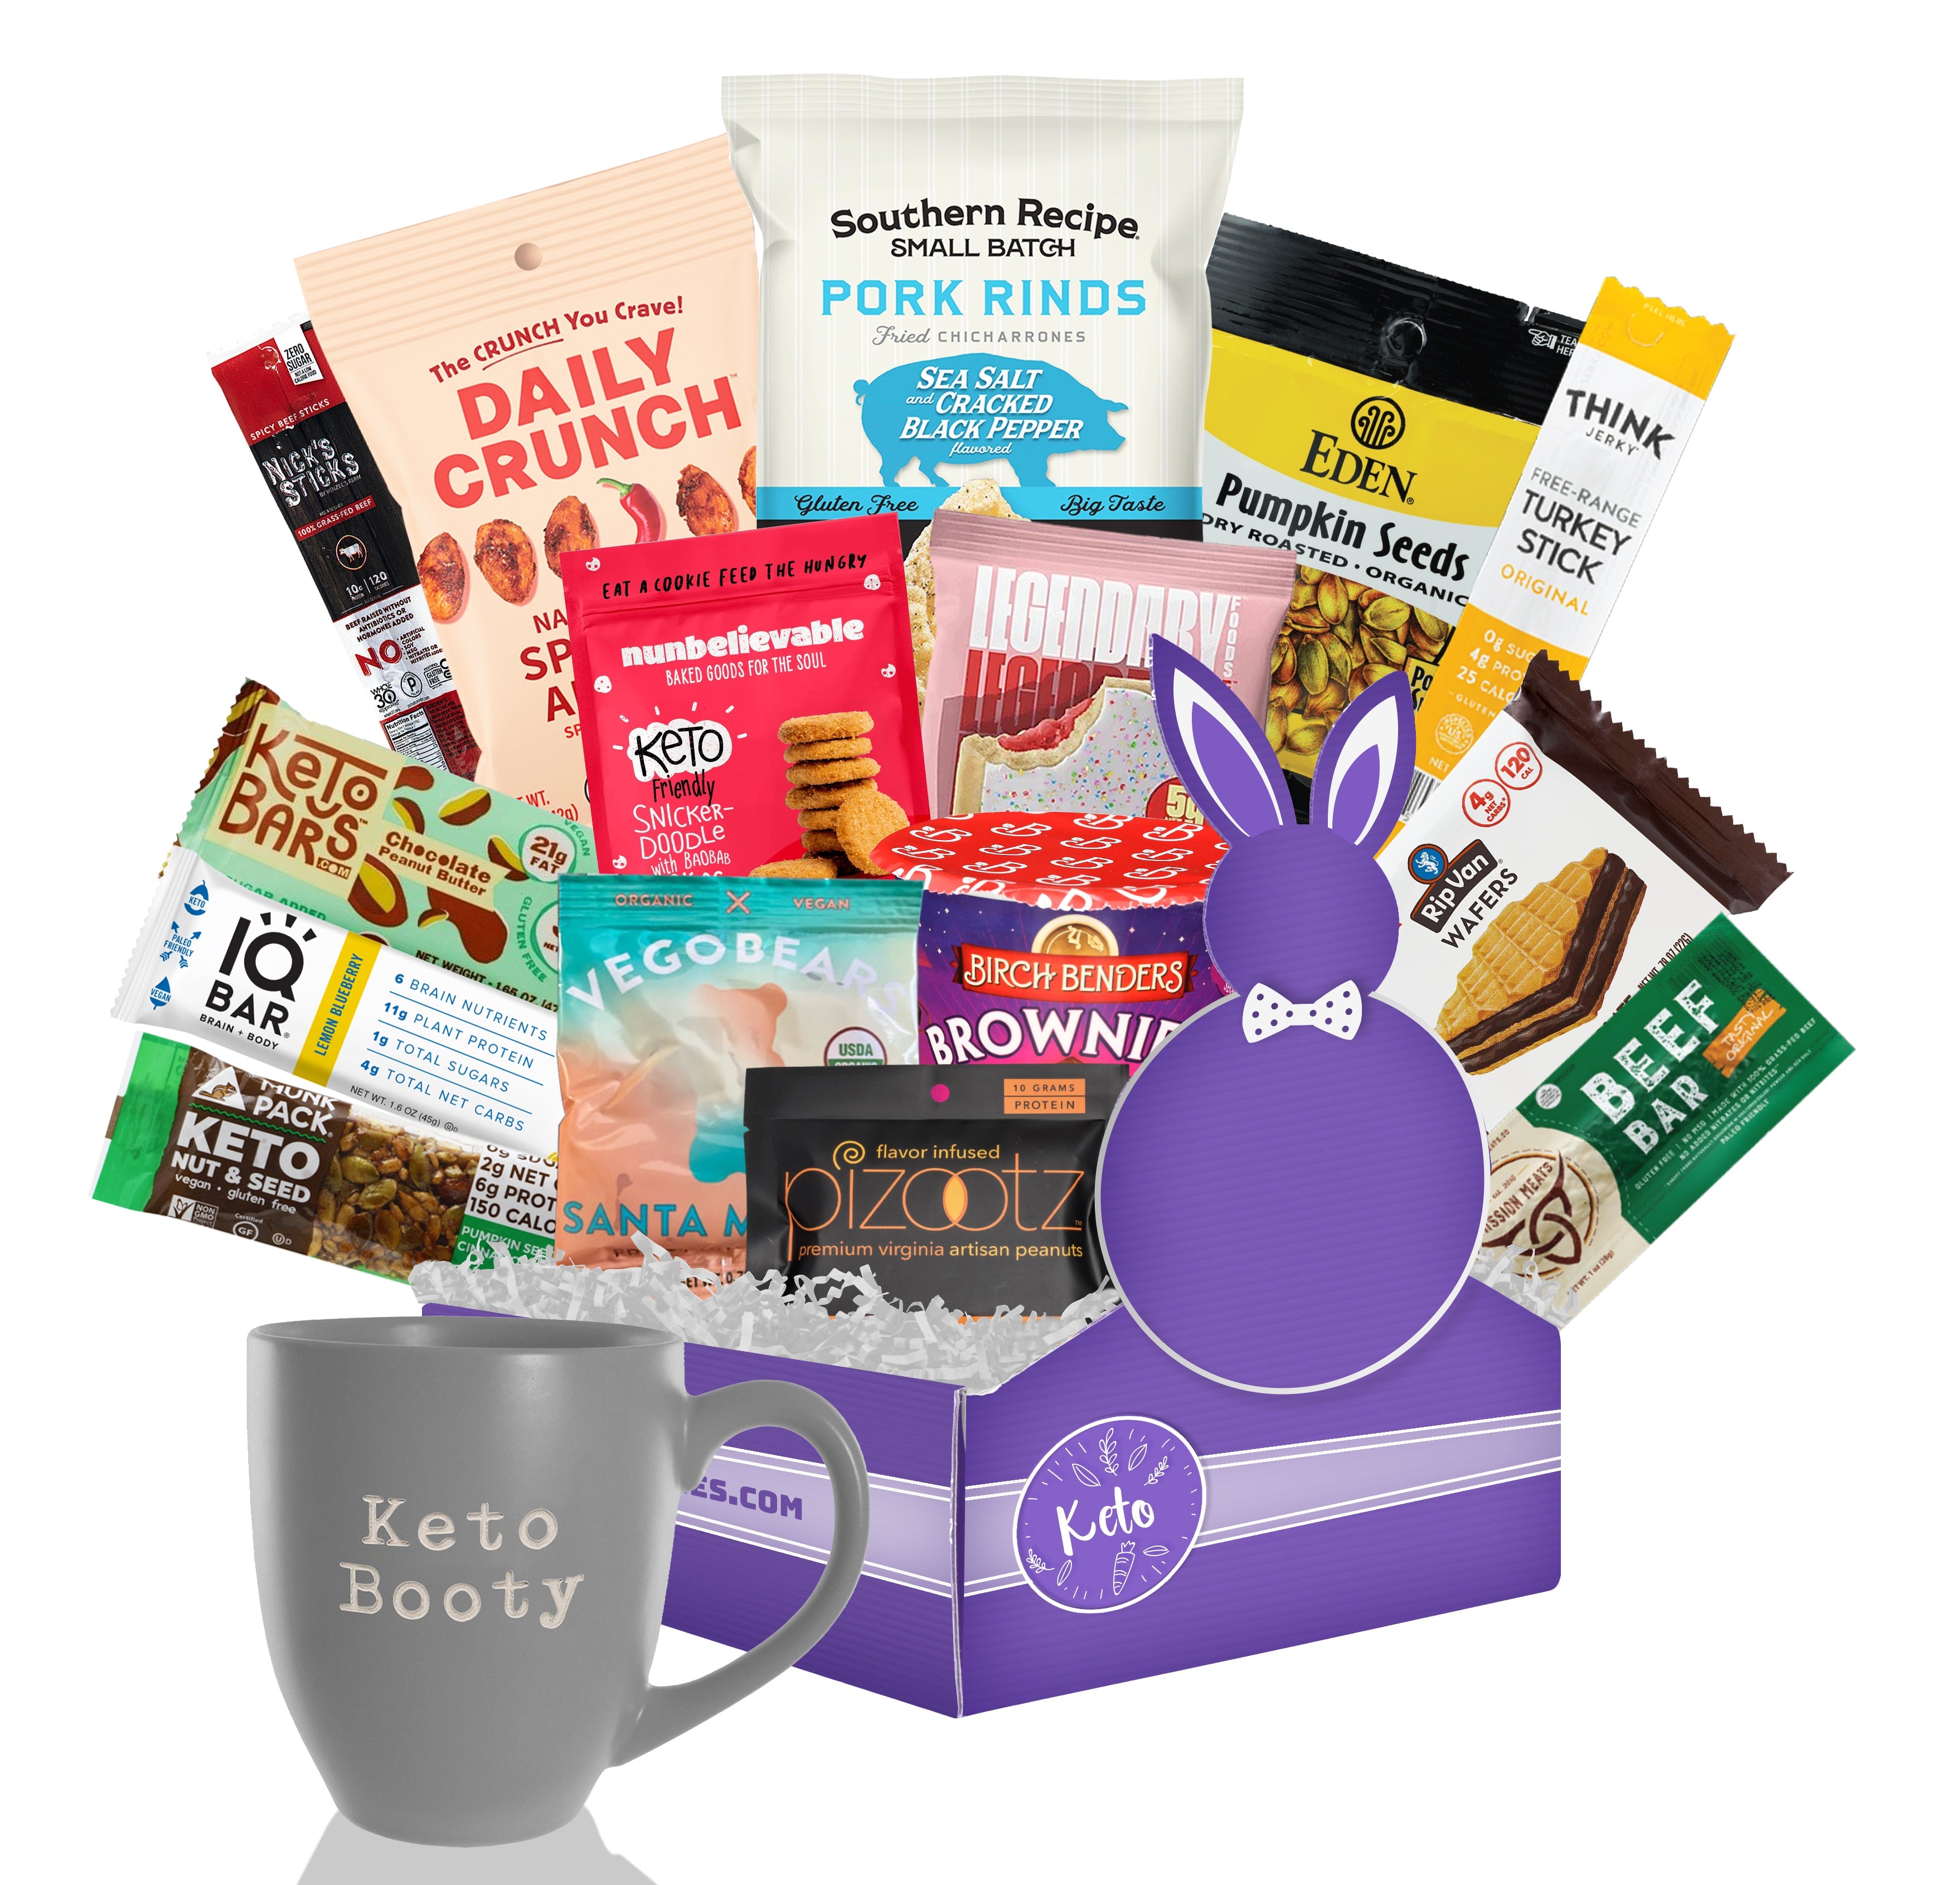 Keto Snacks Sampler & Engraved Keto Booty Mug Care Package | Bunny James Boxes | Bunny James Boxes